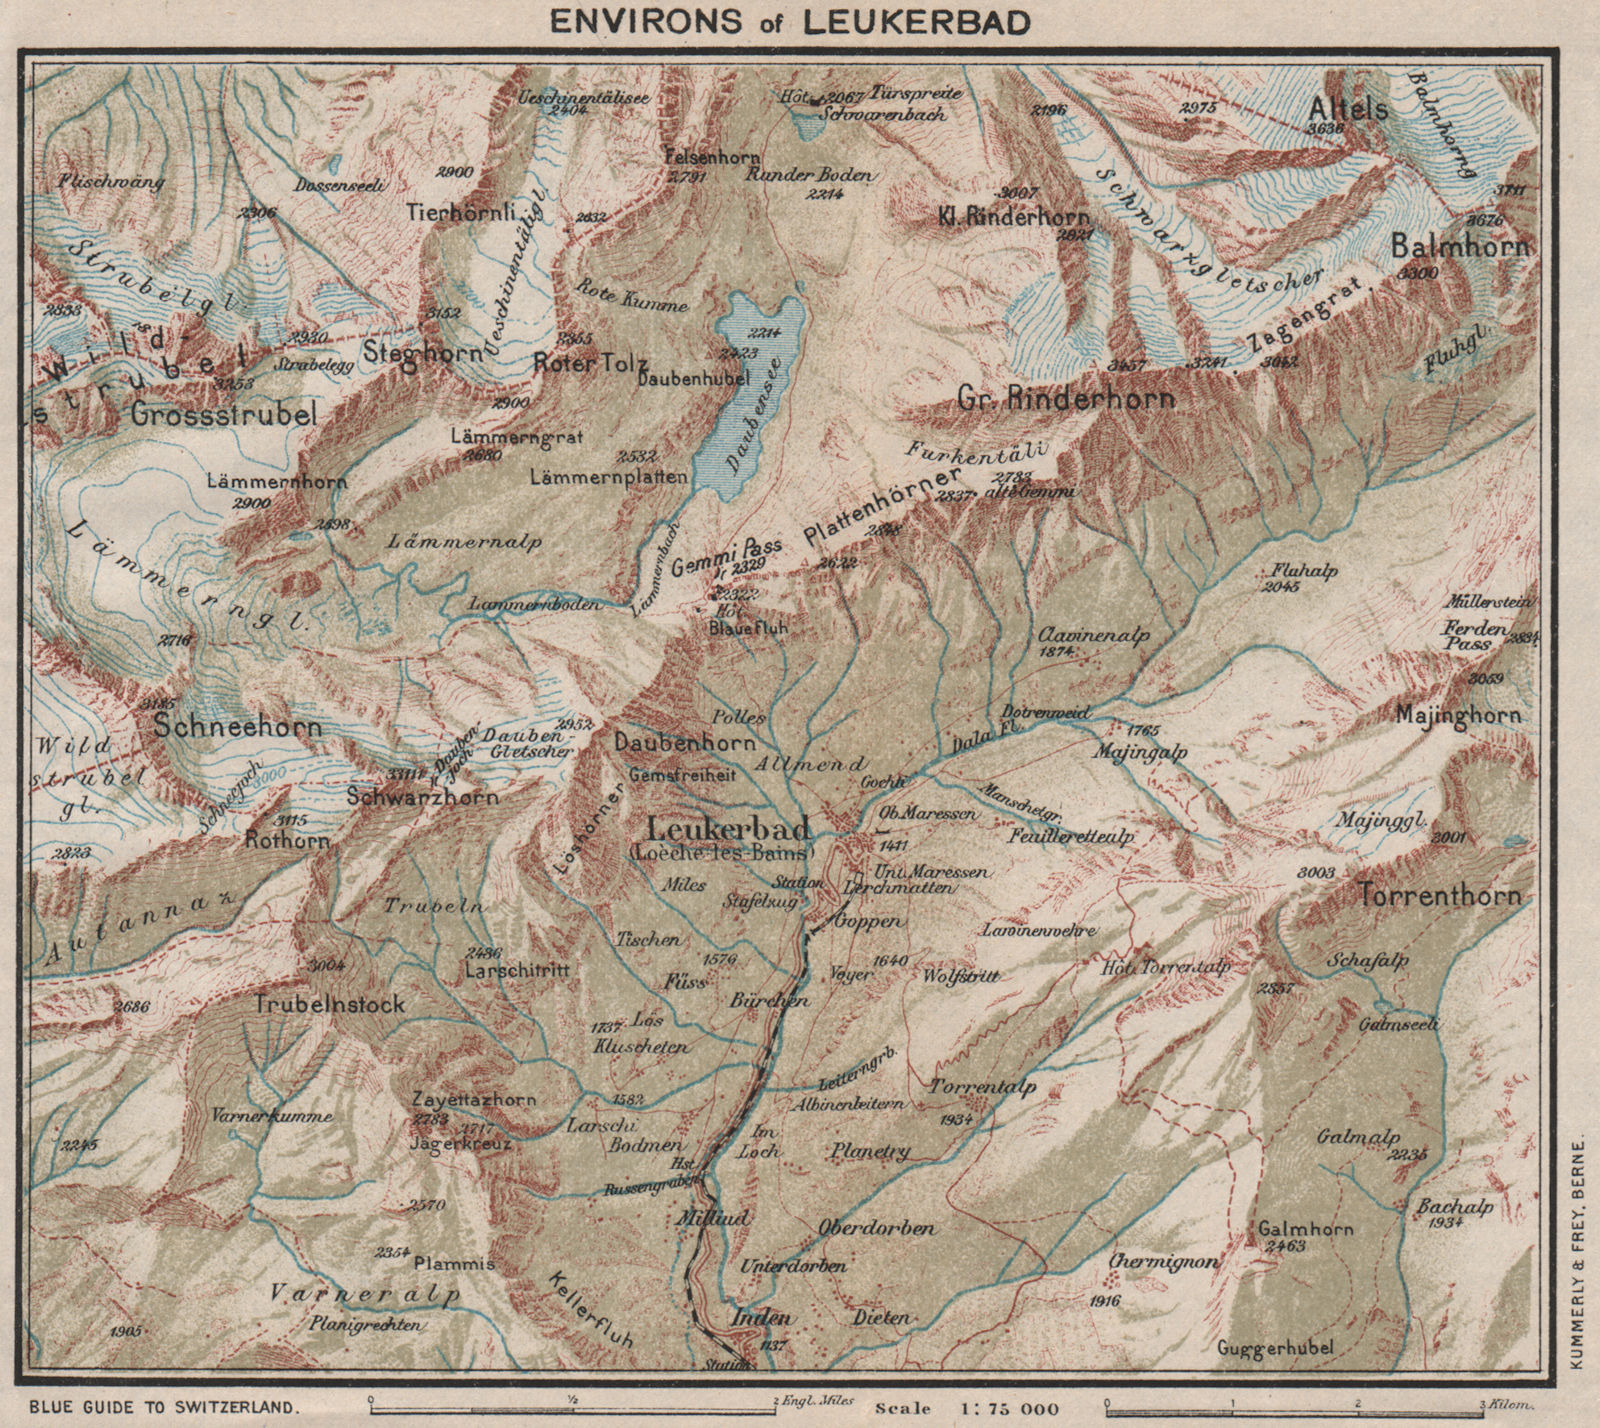 LEUKERBAD & ENVIRONS. Rinderhorn Schneehorn Balmhorn. Switzerland 1930 old map